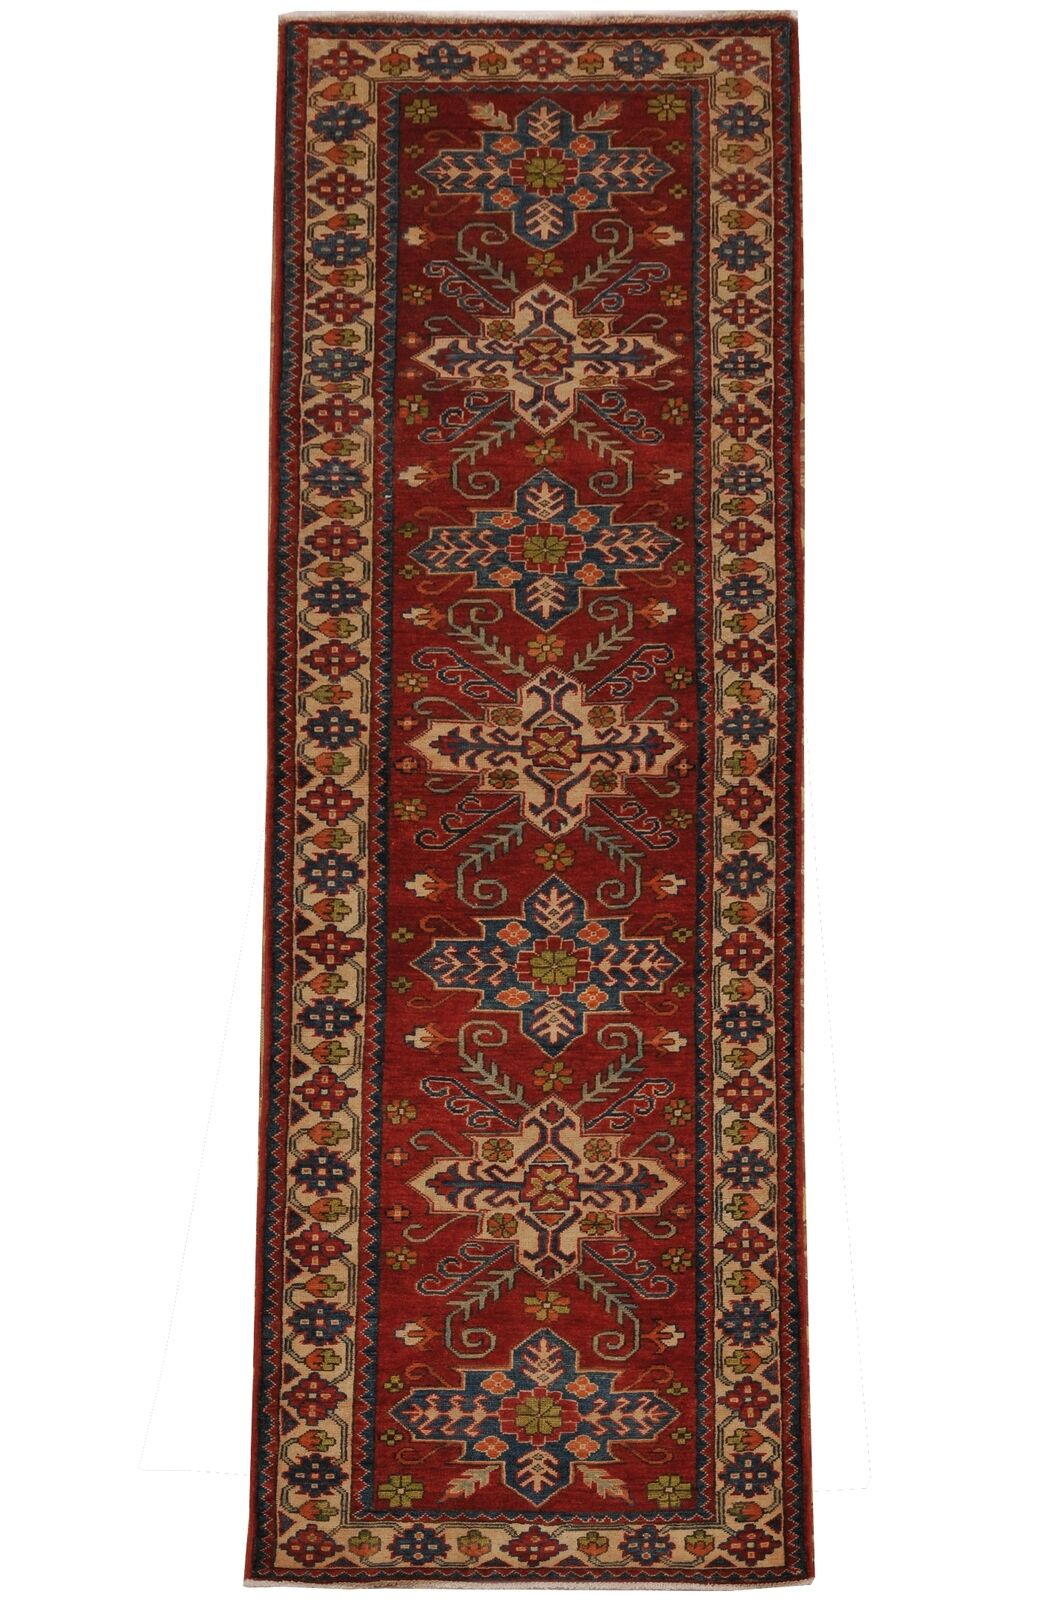 2.5 x 10 Handmade Kazak Hayat Agaci - Mankind Hopes Floor Runner Rugs Carpet Rug